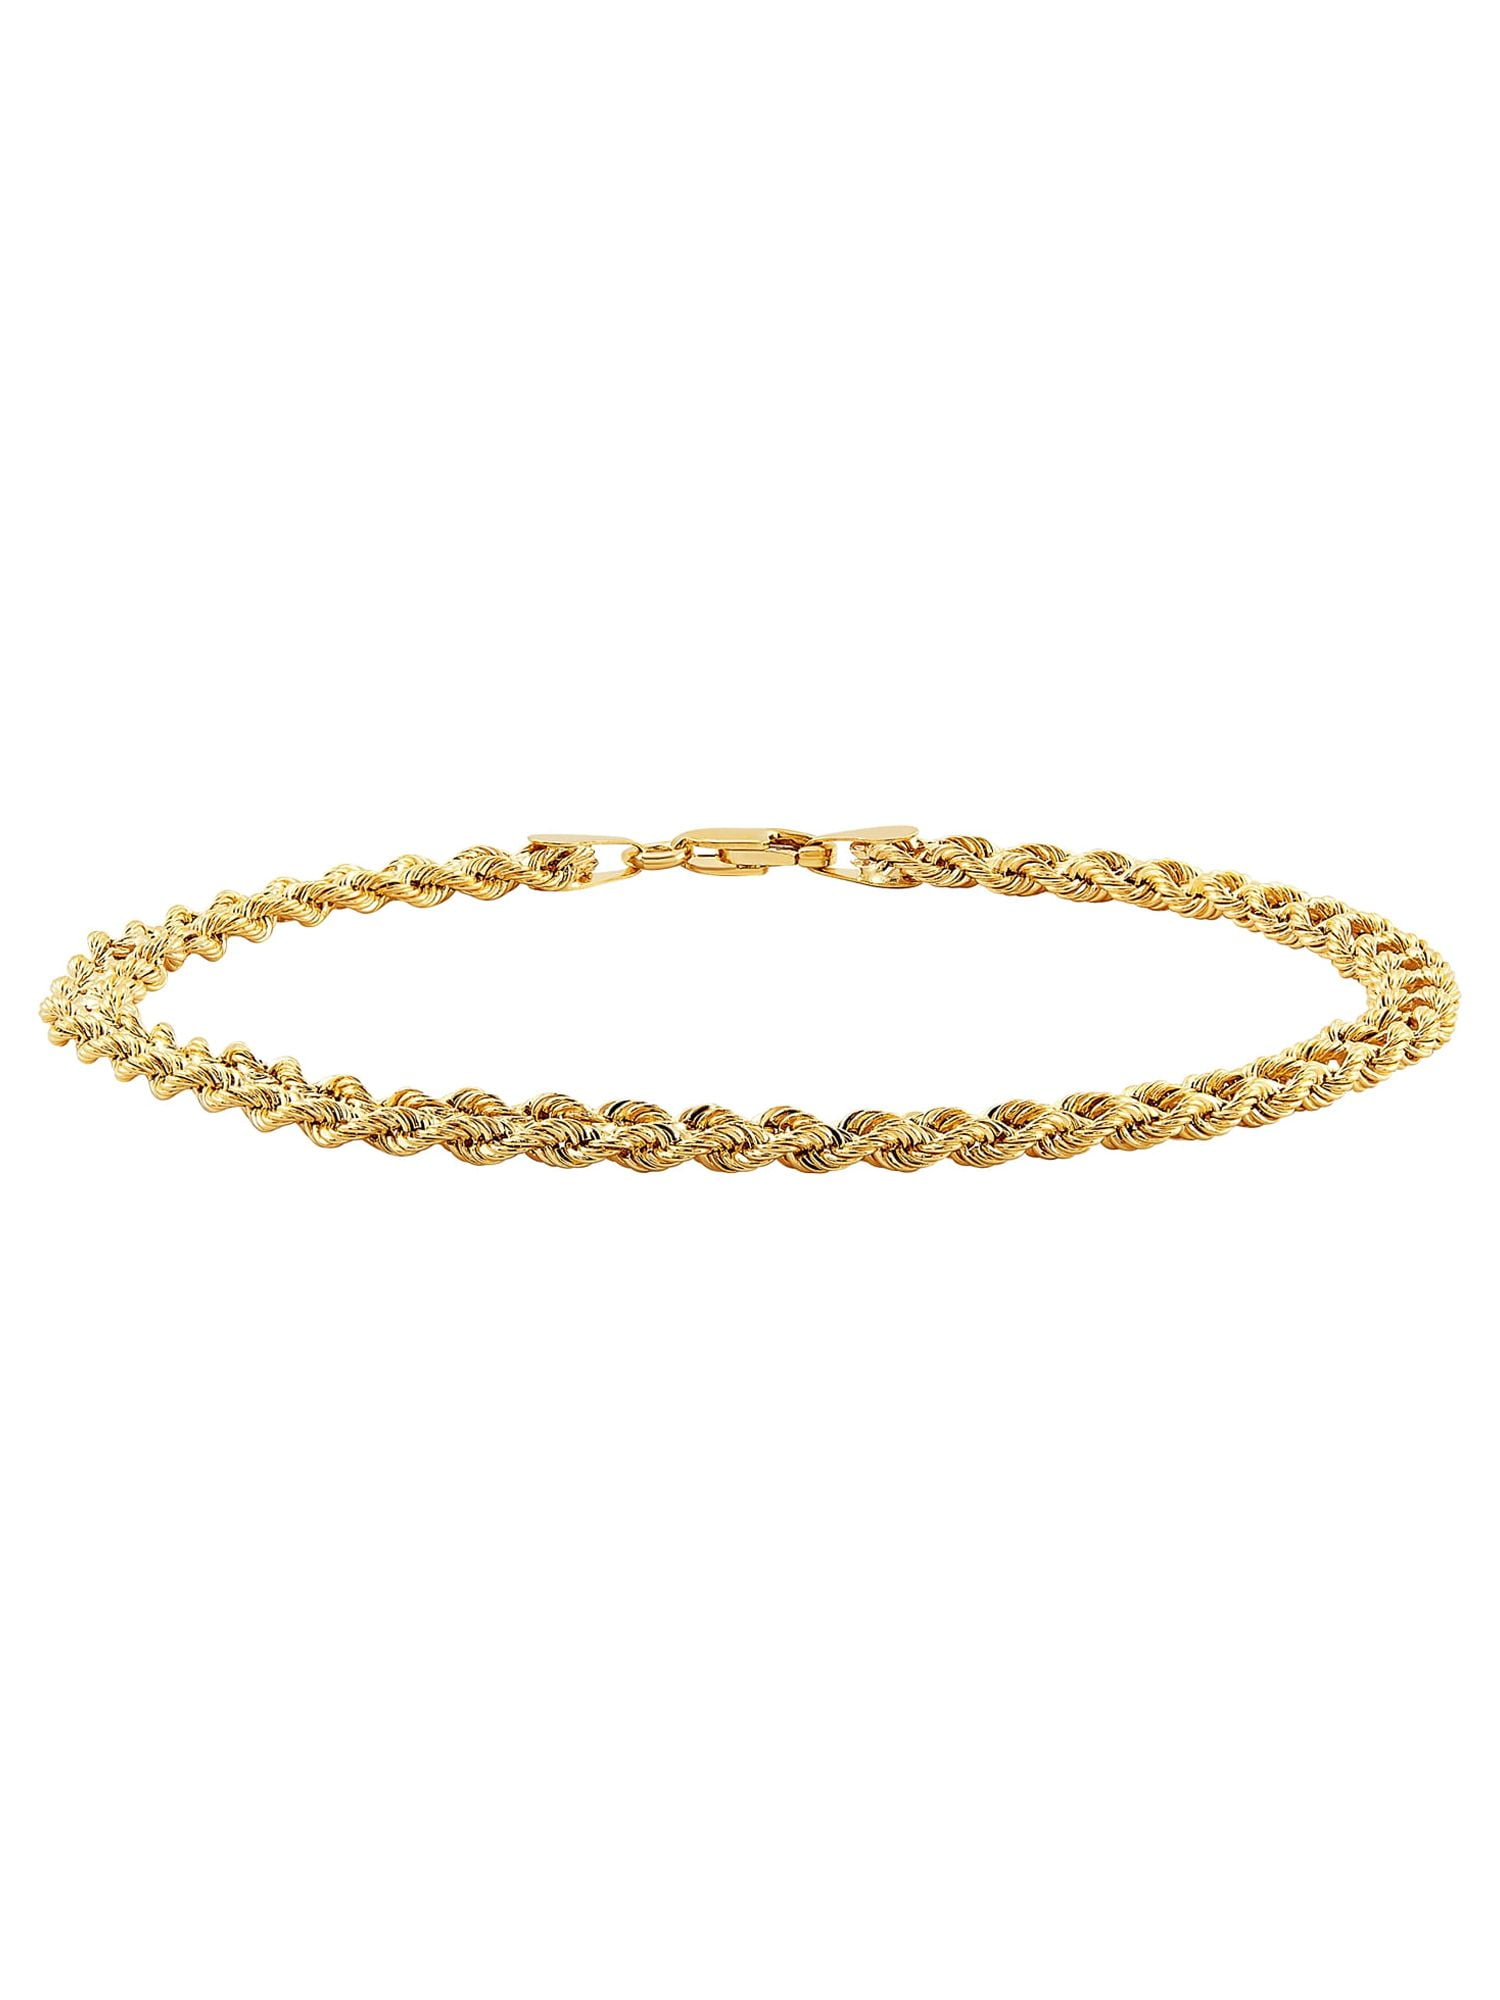 Nuragold 10k Yellow Gold 10mm Rope Chain Diamond Cut Bracelet, Mens Jewelry  8